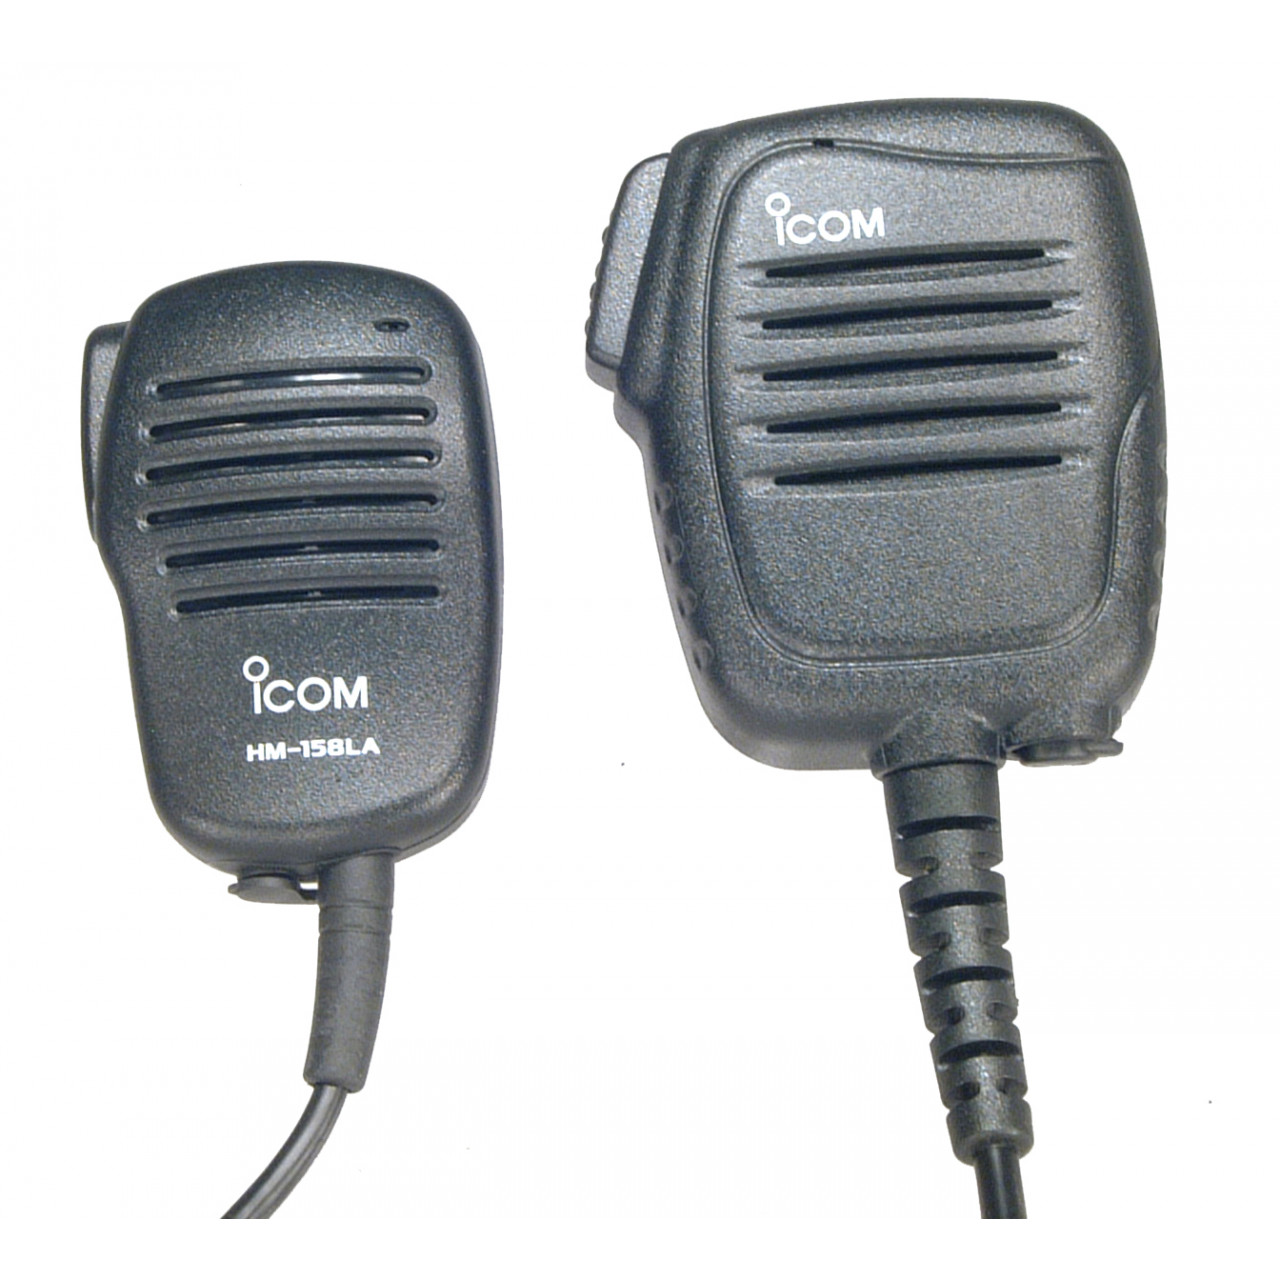 HM-159LA Microphones - ICOM